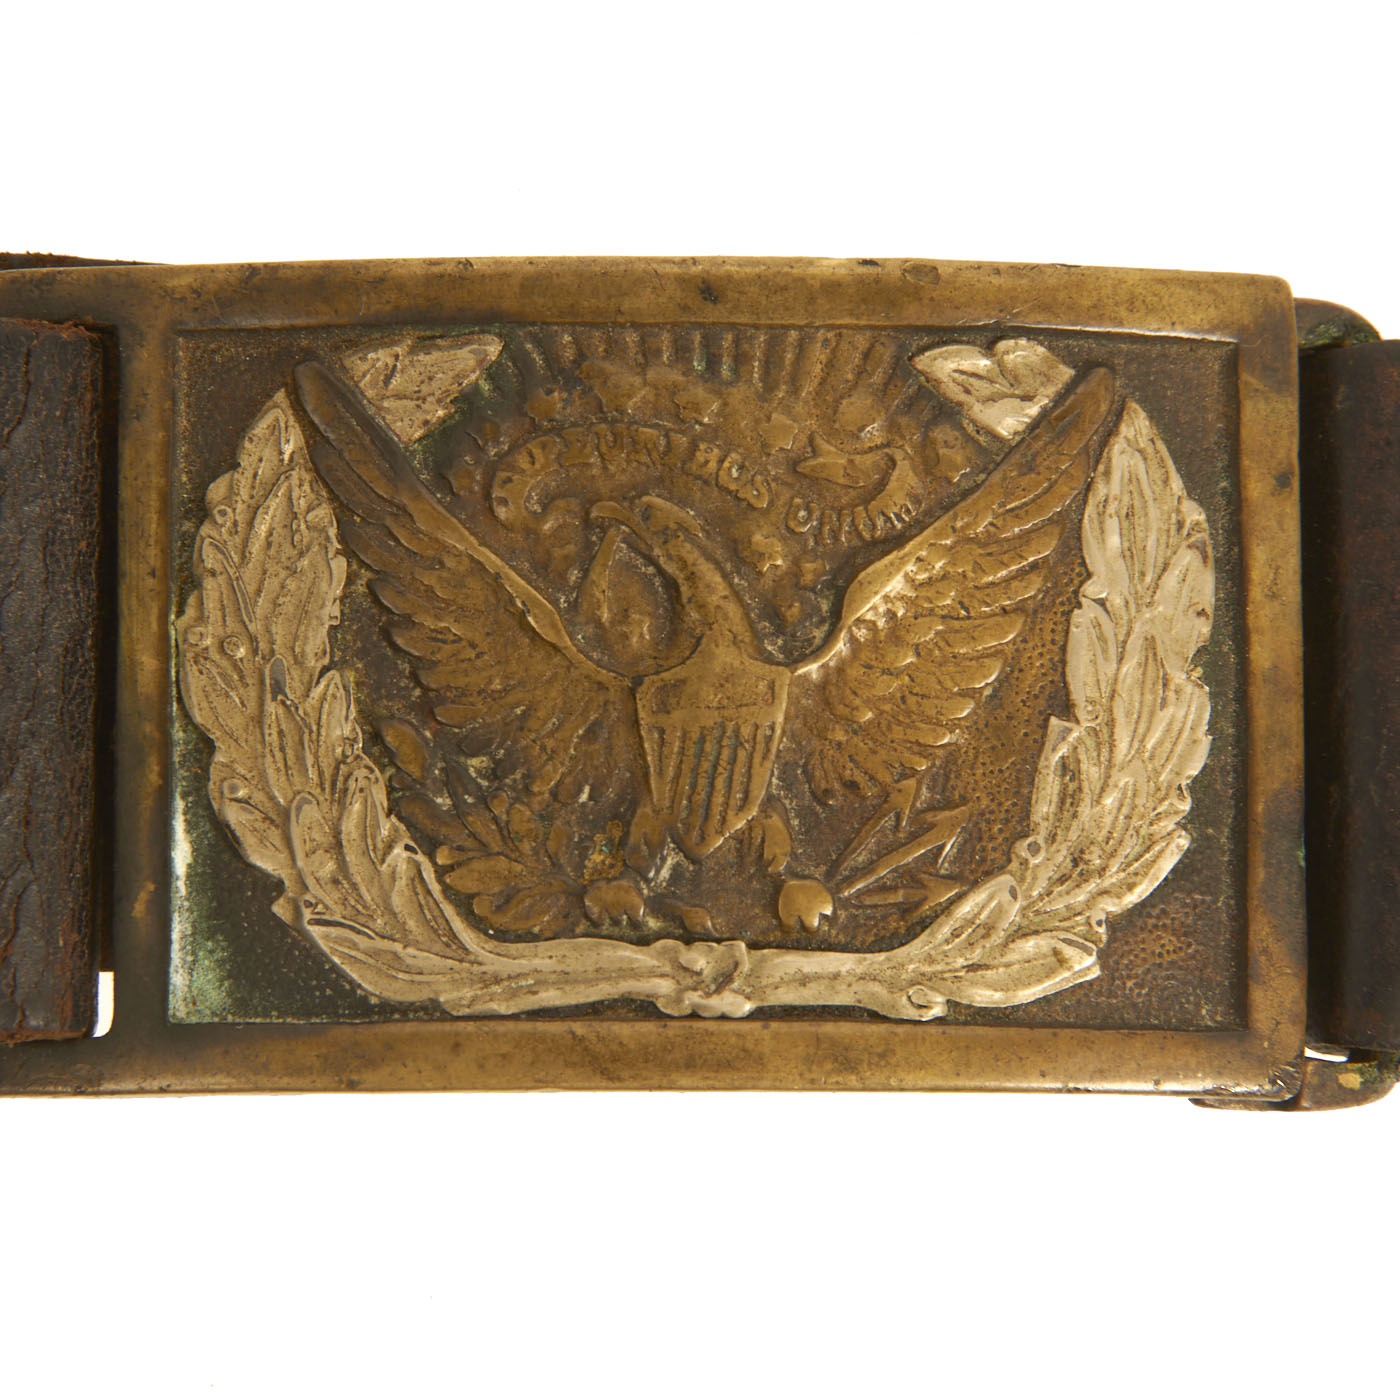 Civil War US Union Equipment NCO Field Belt & Buckle - Memorabilia